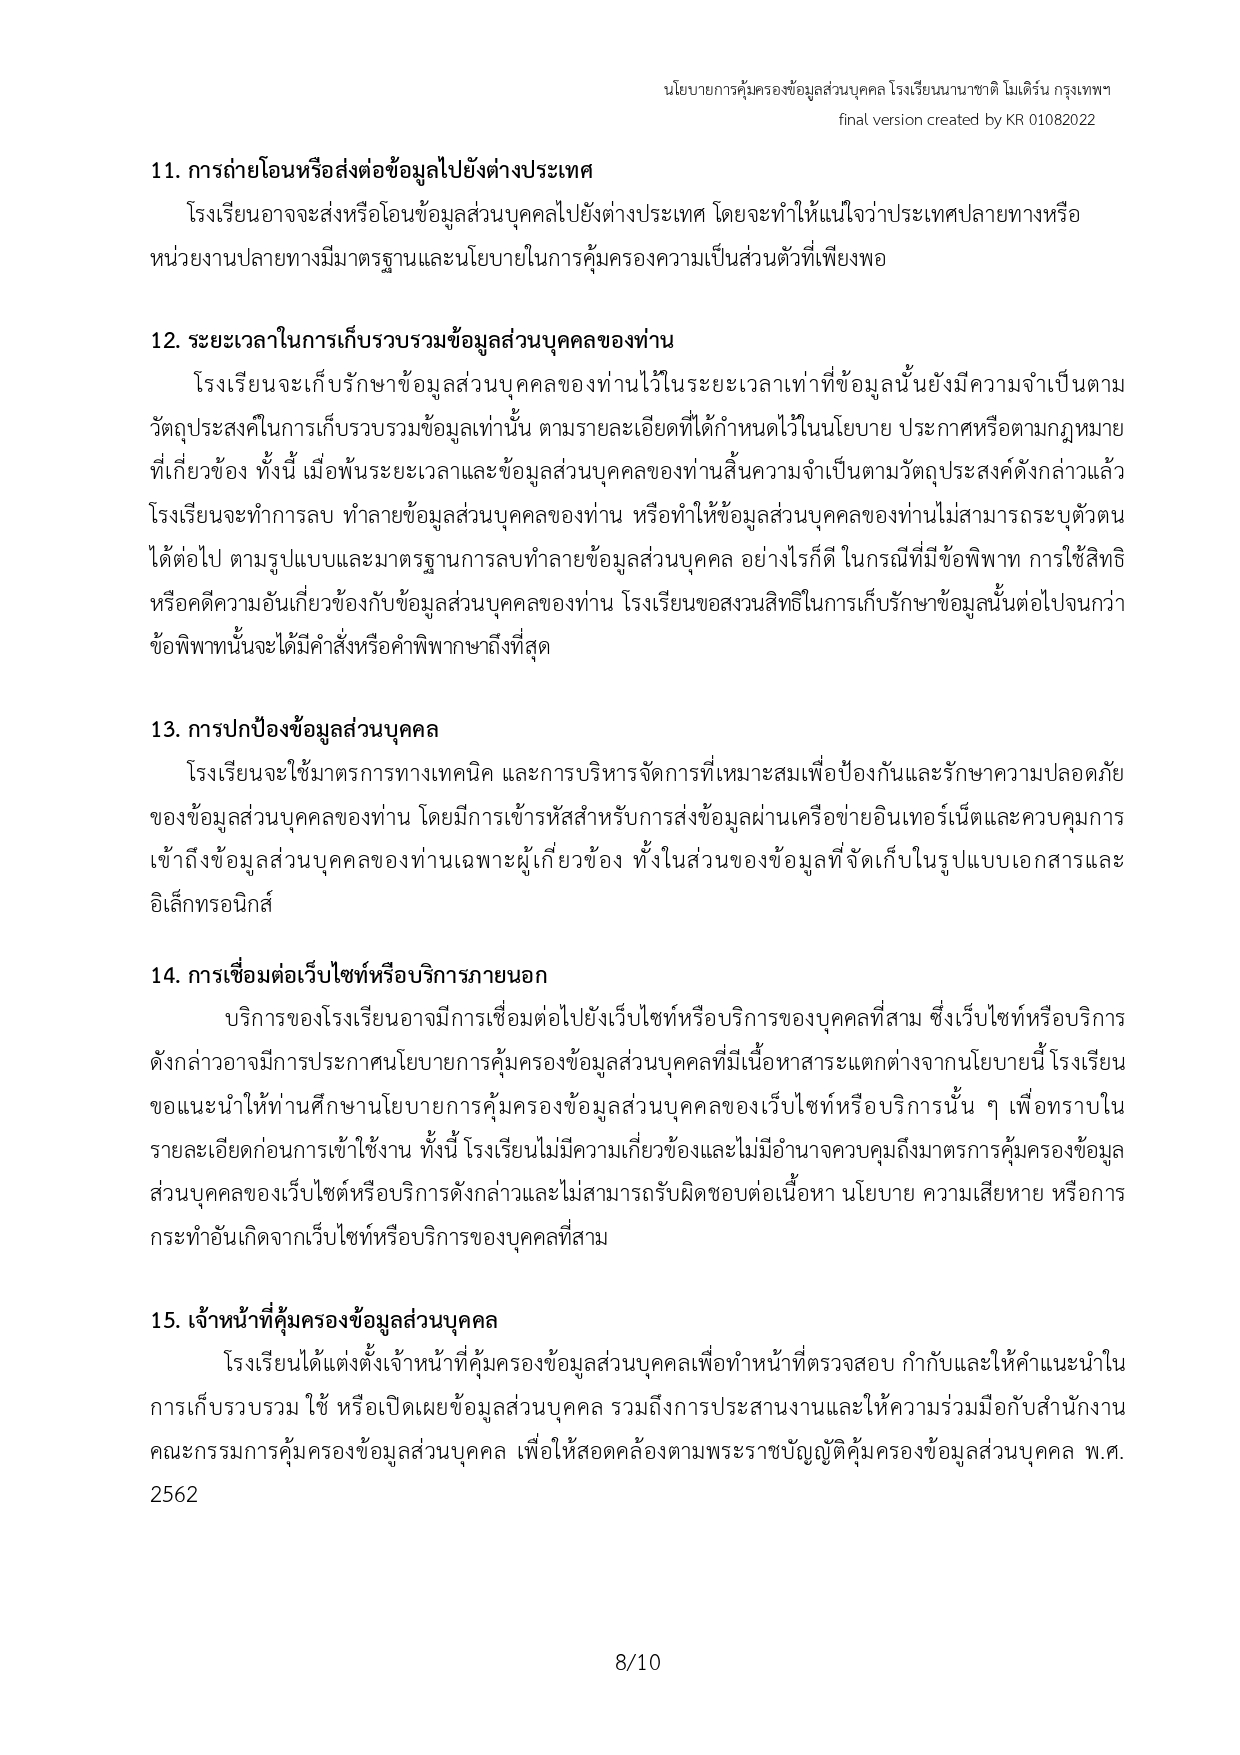 PDPA MISB ภาษาไทย final version 01012566 ไม่ลงชื่อ page 0008